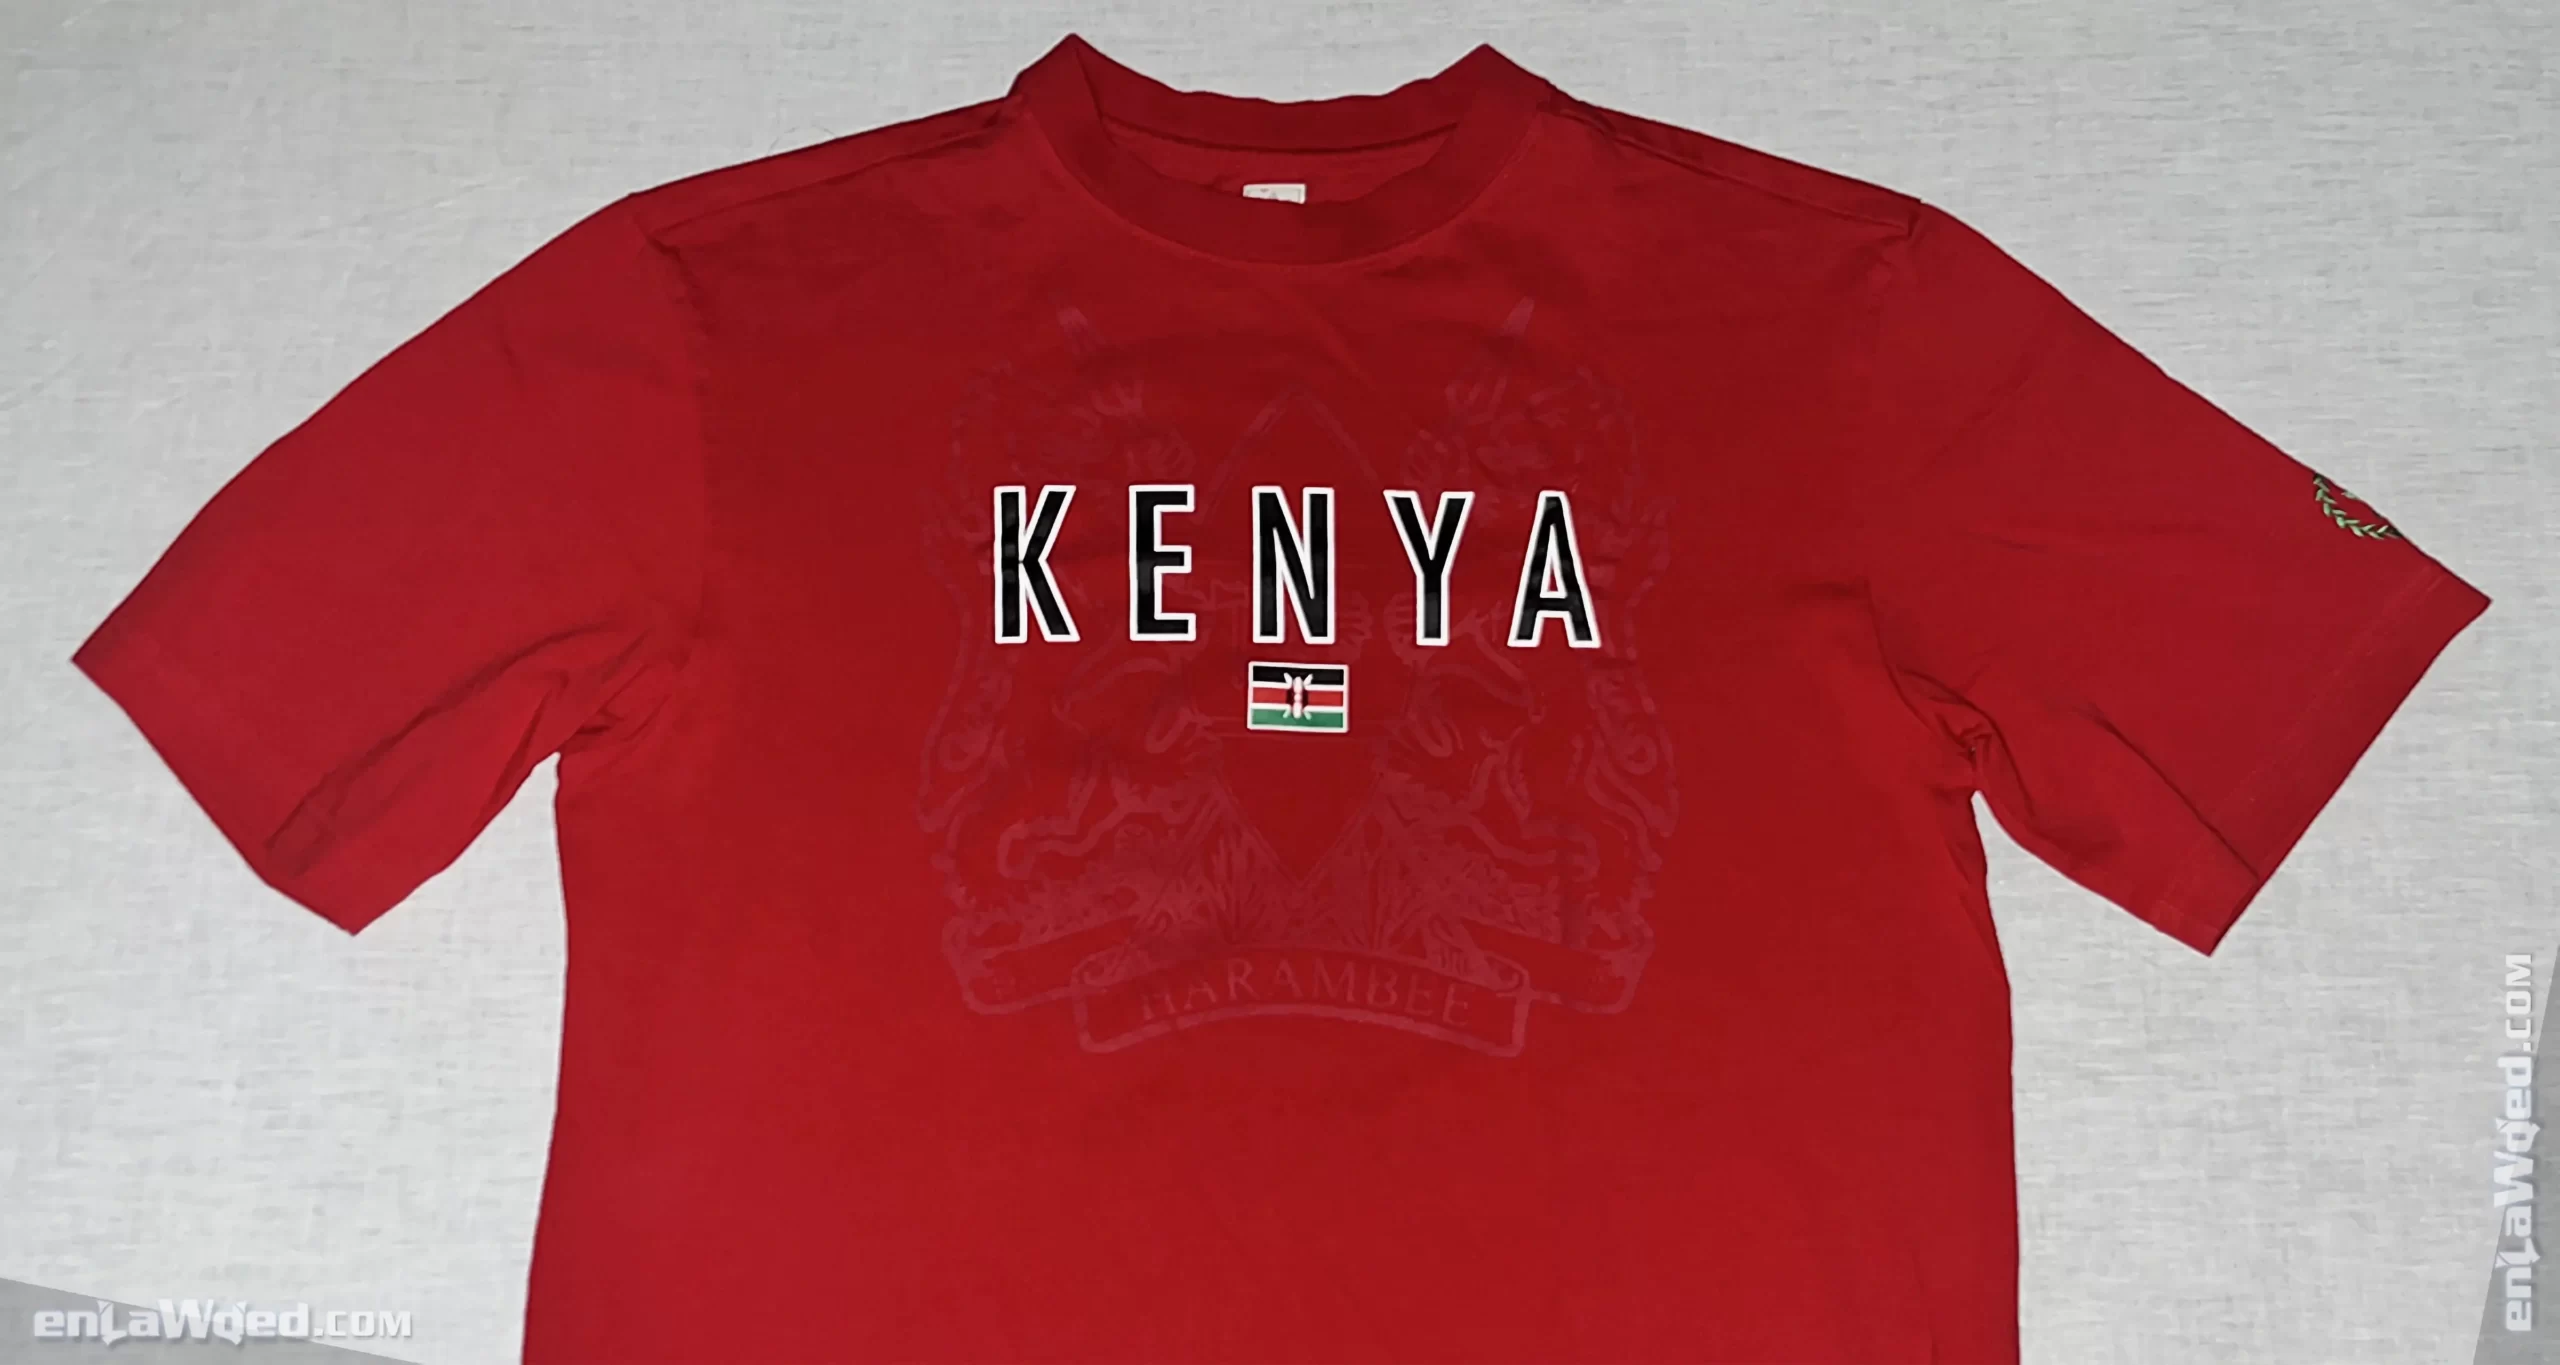 Men’s 2007 Kenya Harambee T-Shirt by Adidas Originals: Overnight (EnLawded.com file #lp1nbdf3126188iyij3tlbypr)